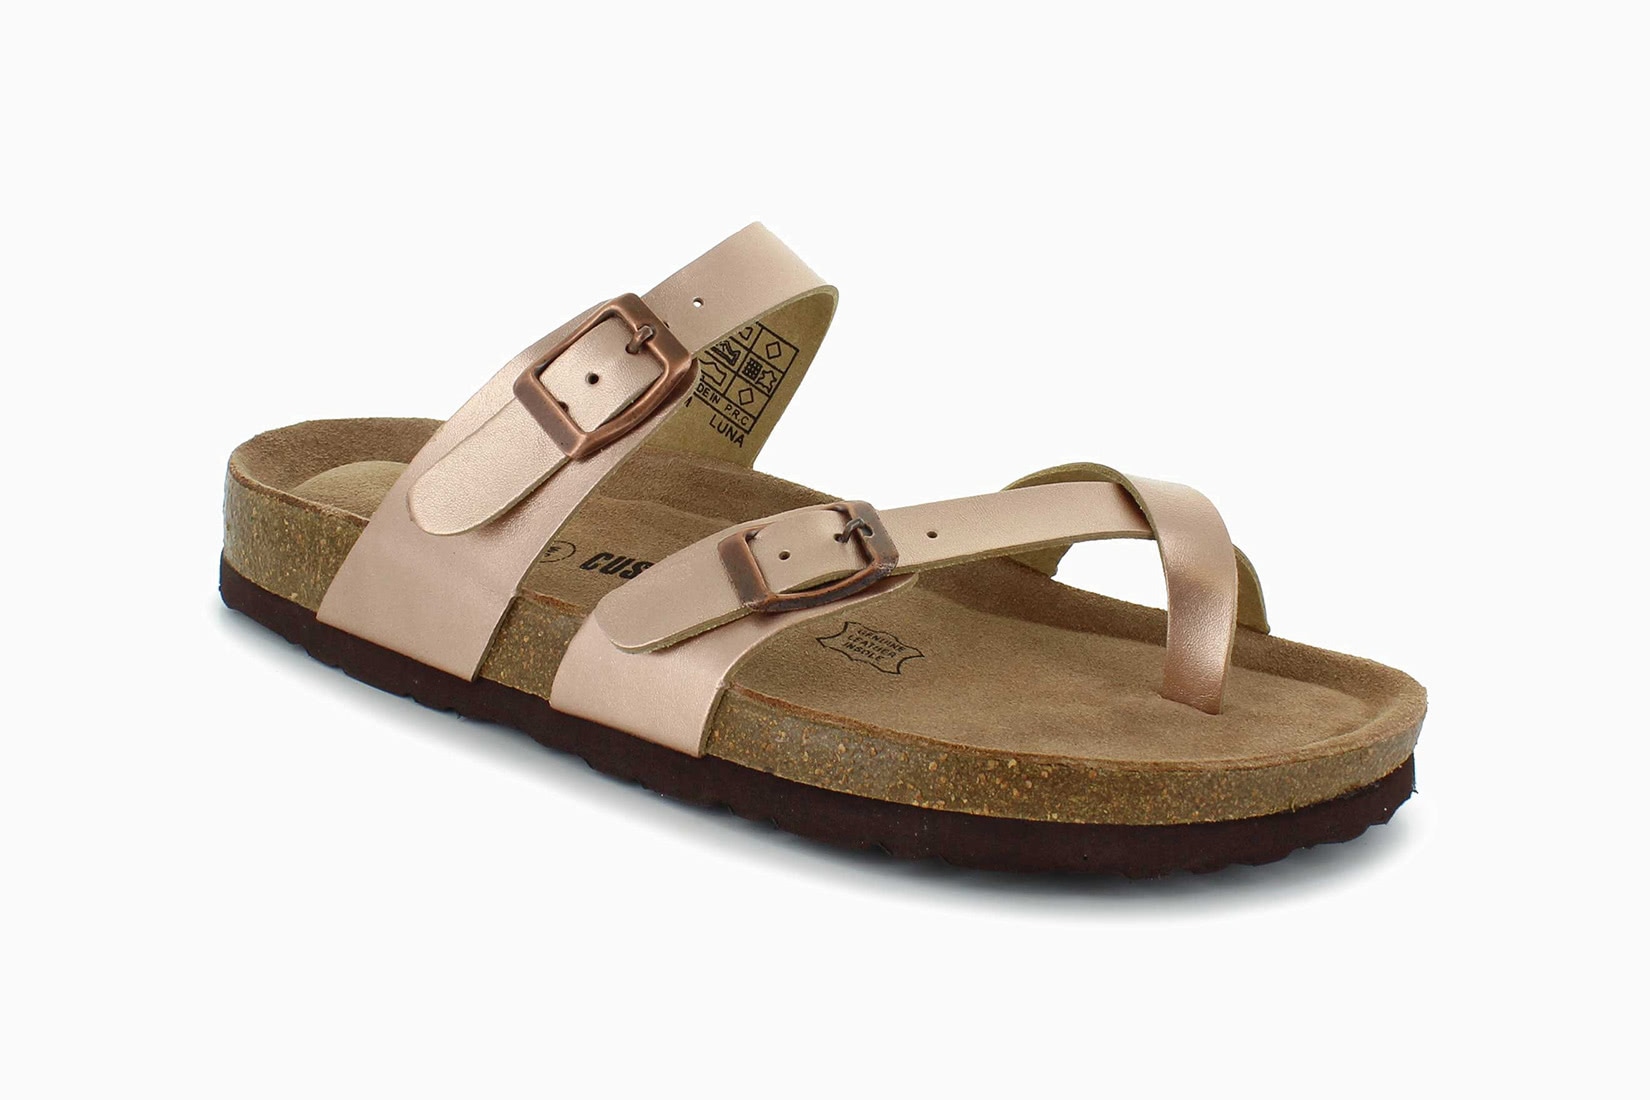 Memela Clearance sale Womens Sandals Ladies Mother Leather Flat Soft Beach Sandals Roman Shoes Footwear Outwear